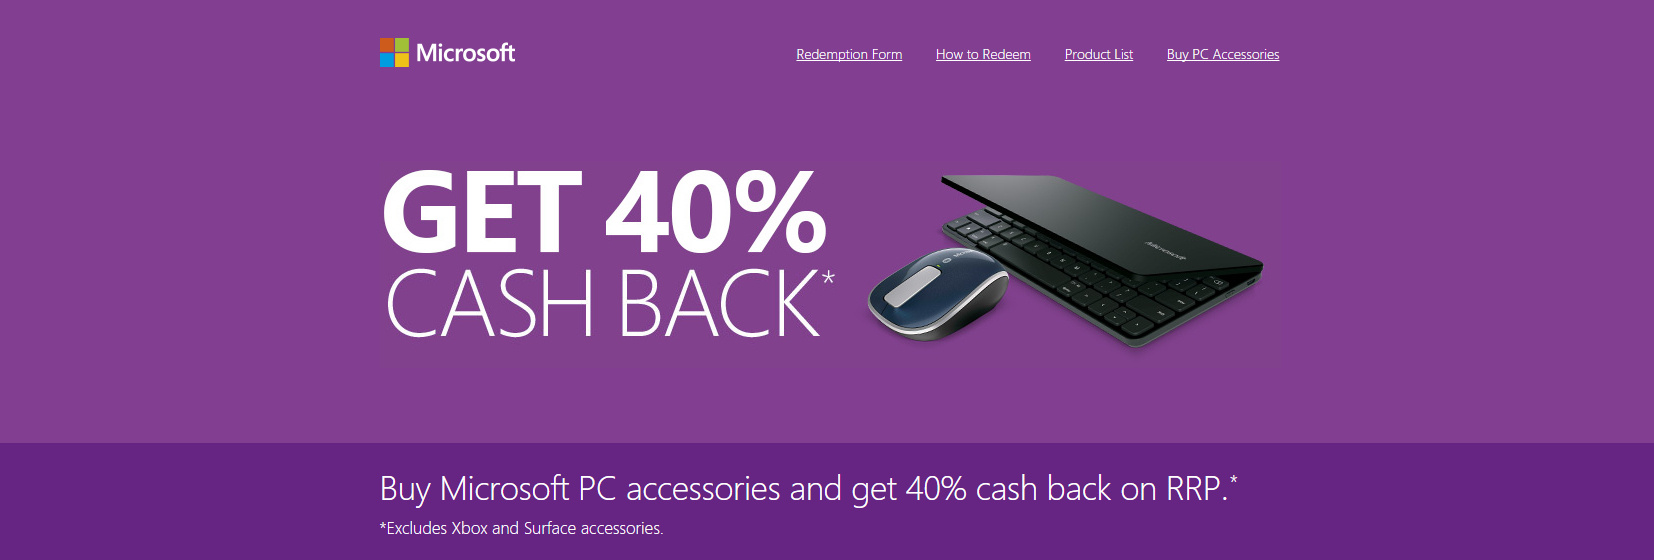 购买Microsoft PC accessories 40% Cash Back